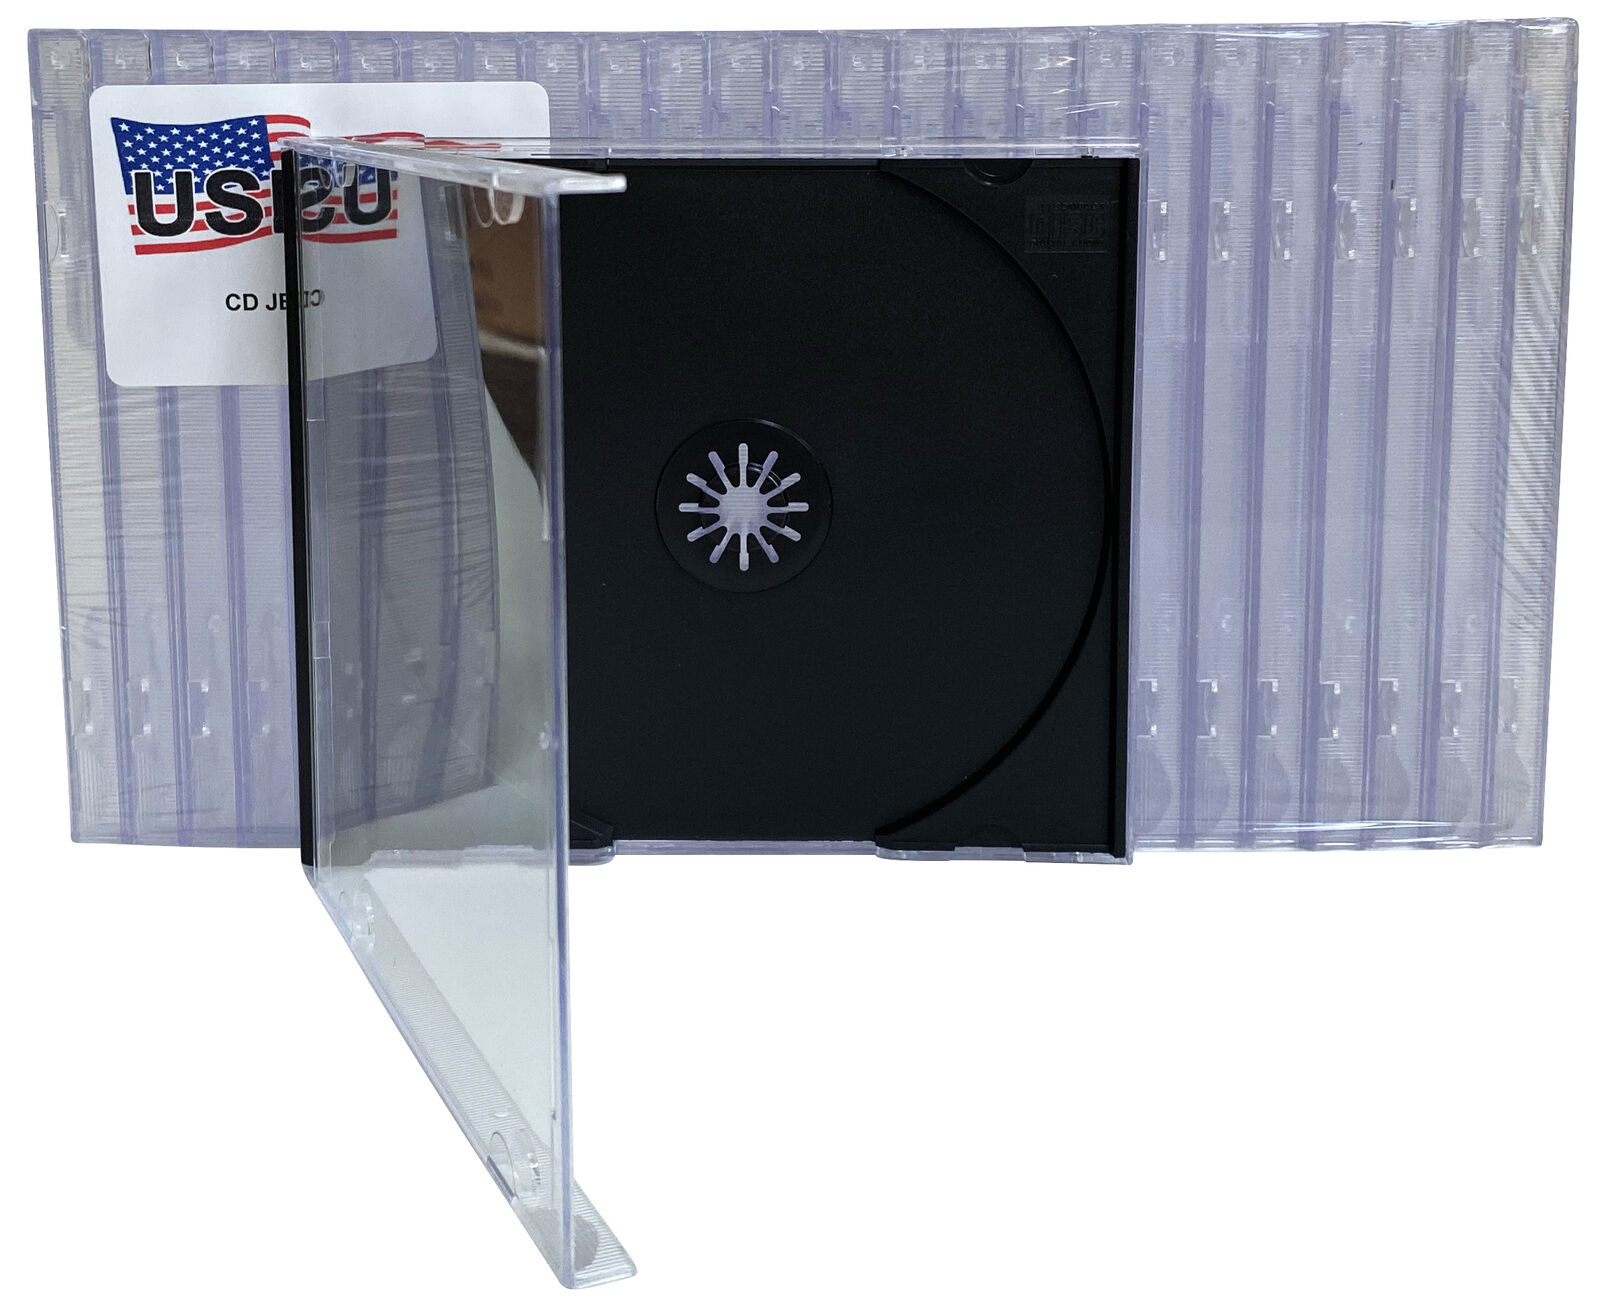 400 USDISC CD Jewel Cases Standard 10.4mm, Single 1 Disc (Black) Lot